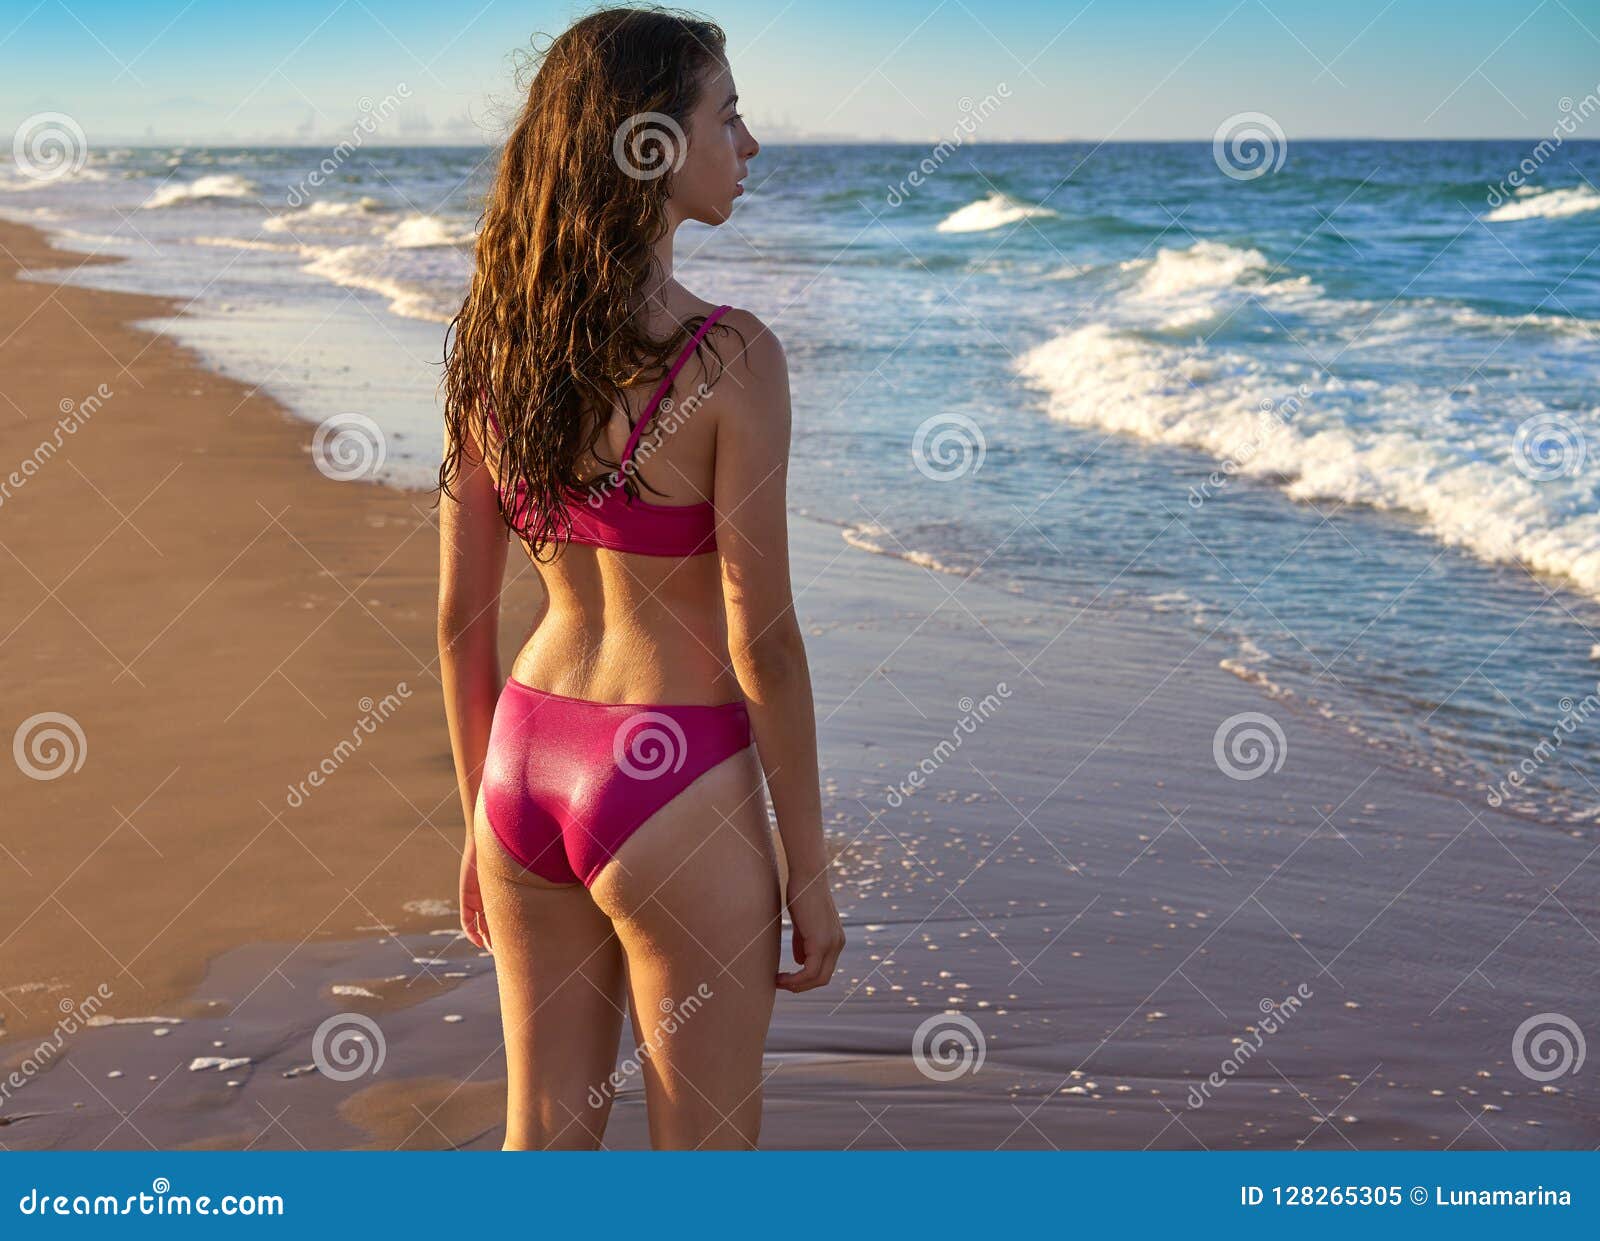 bikini girl in the beach blue shore